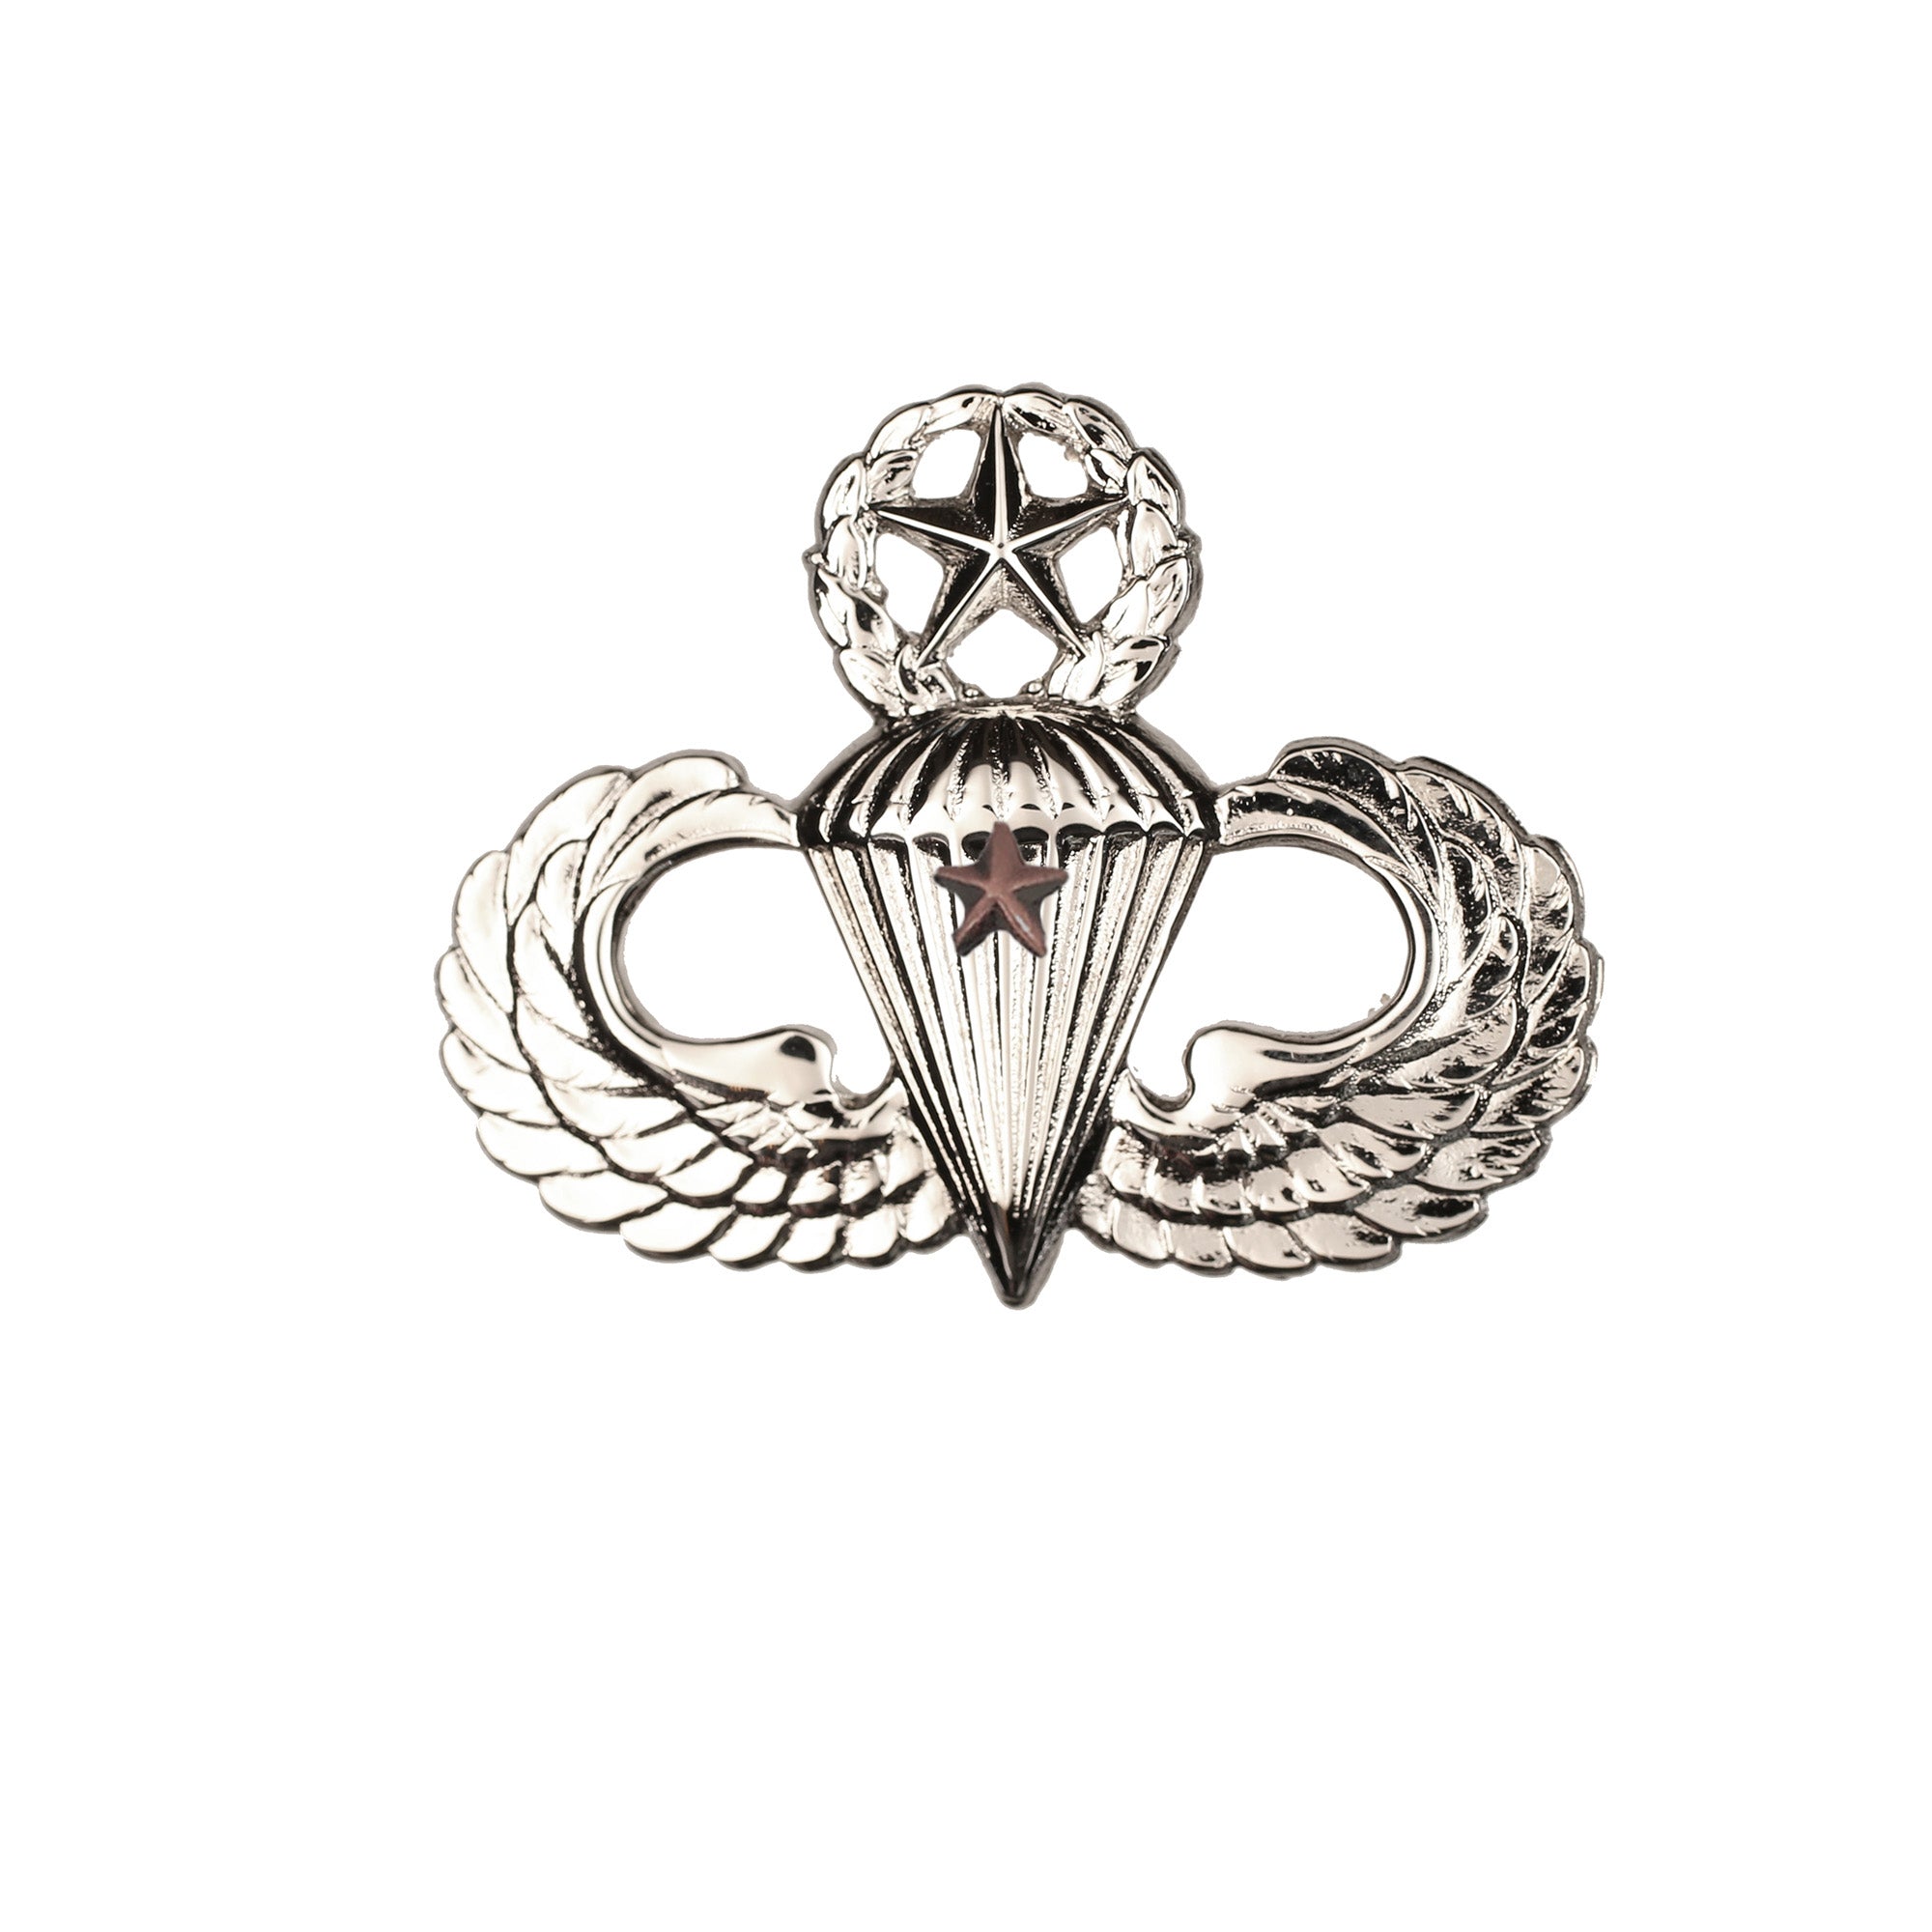 Combat Parachutists (Jump Wings) 1 Jump Master Brite Pin-On Army Badge